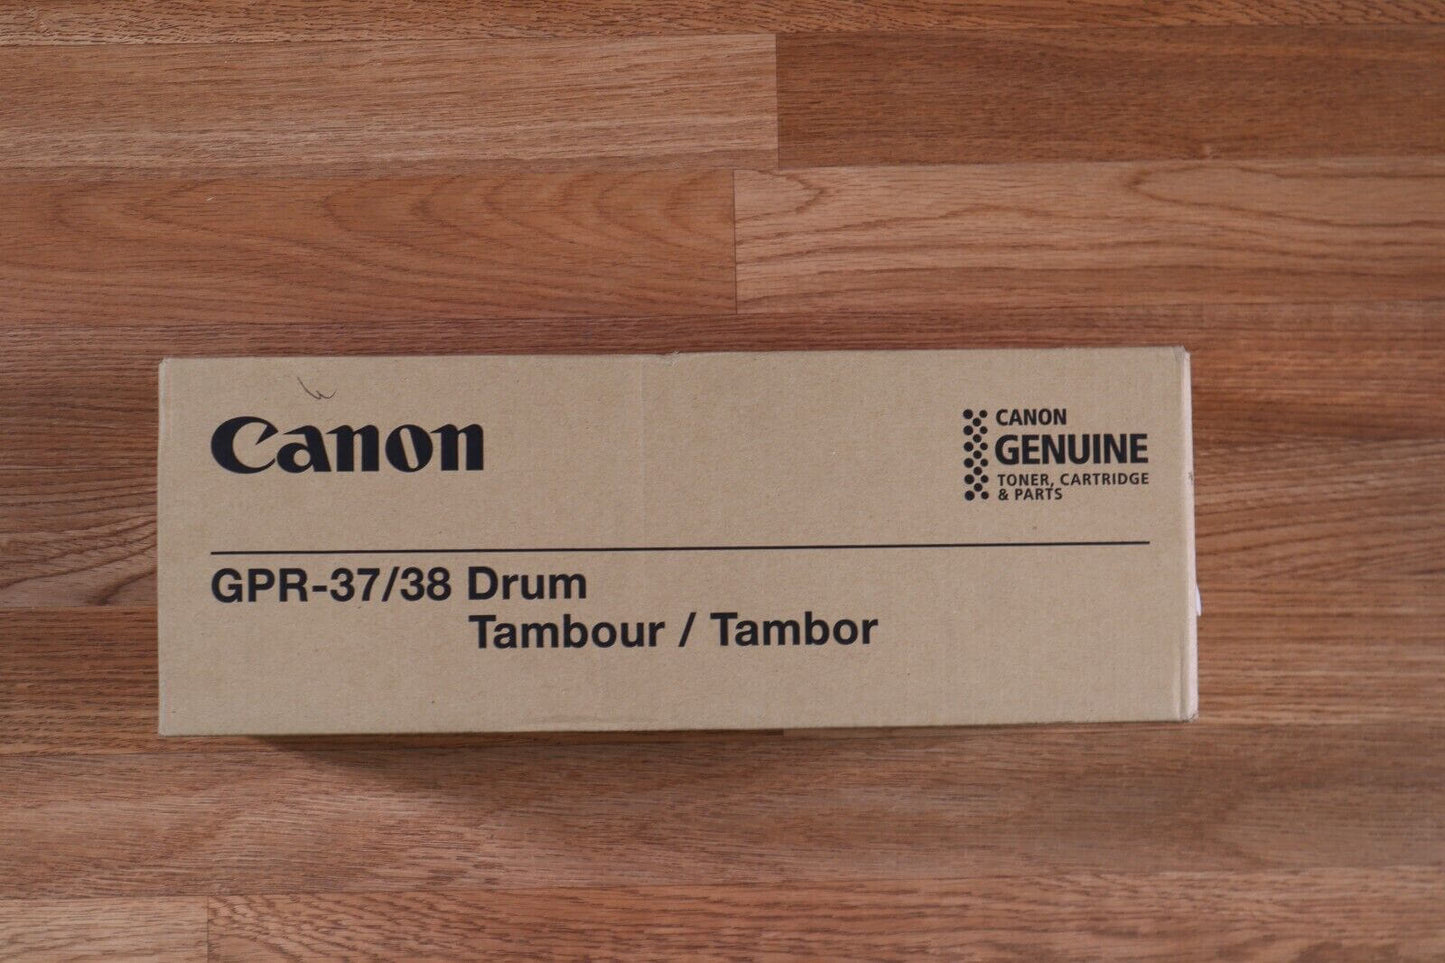 Canon GPR-37/38 Drum MC:3765B003[AA] Serial#36D17101AU iRADV 6055/6065/6075/6255 - copier-clearance-center